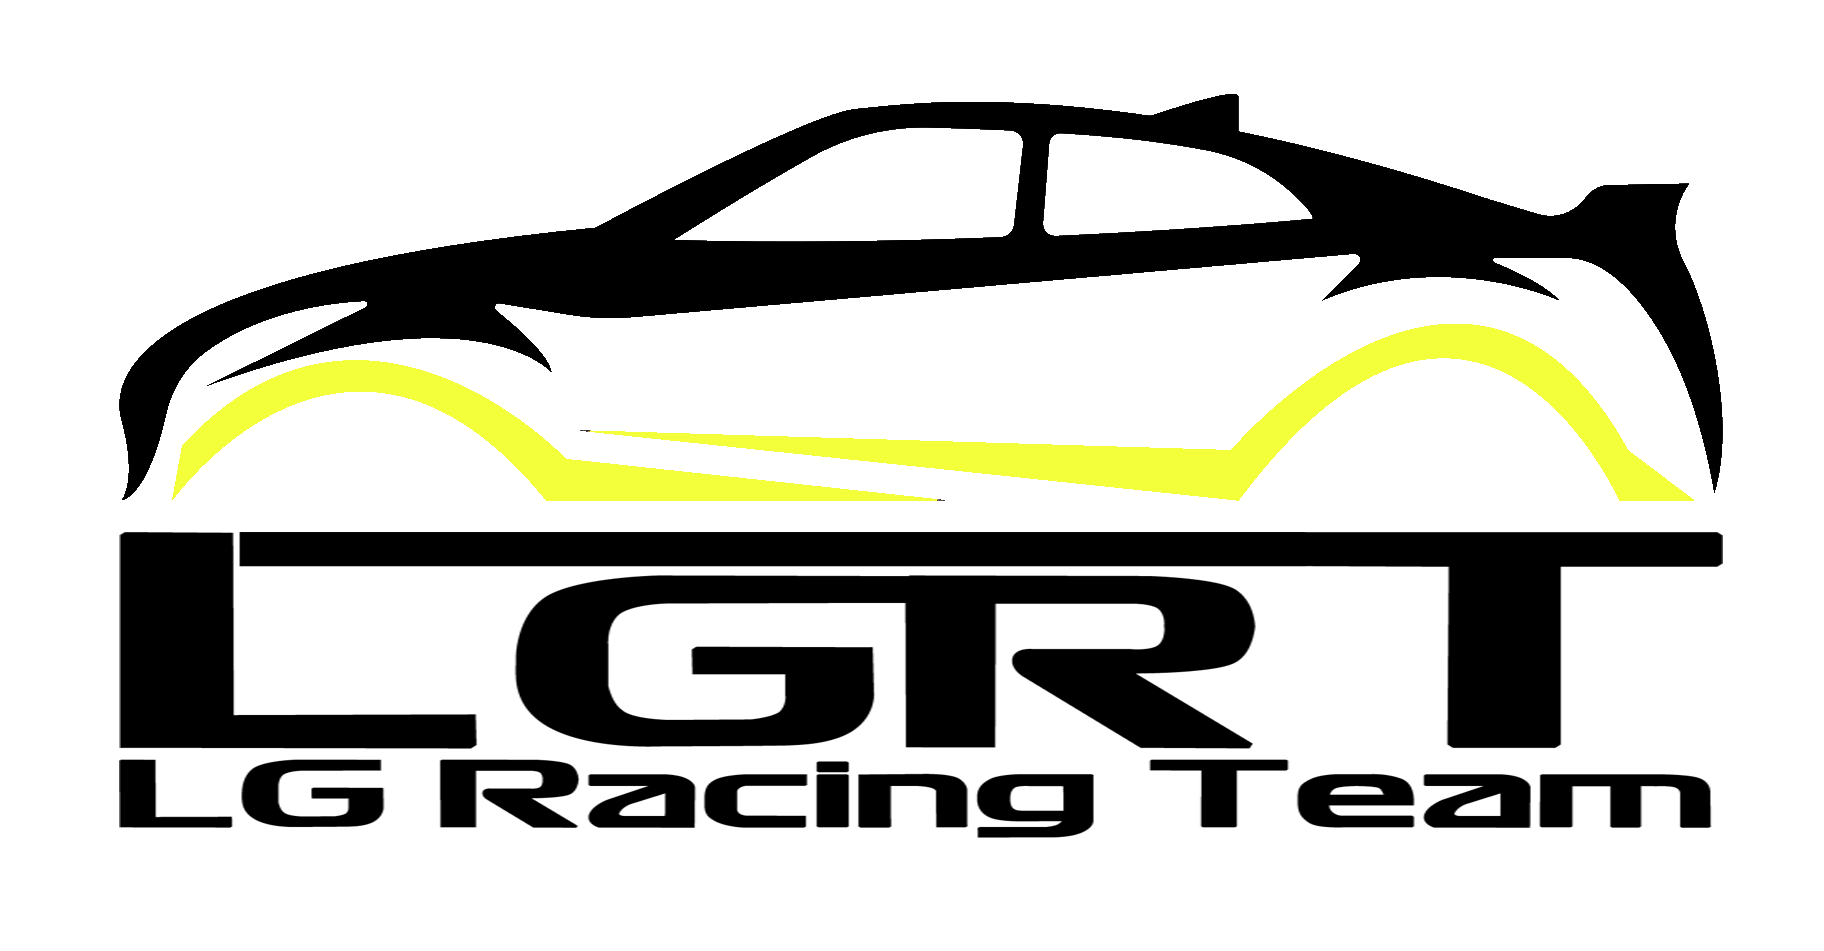 LG Racing Team